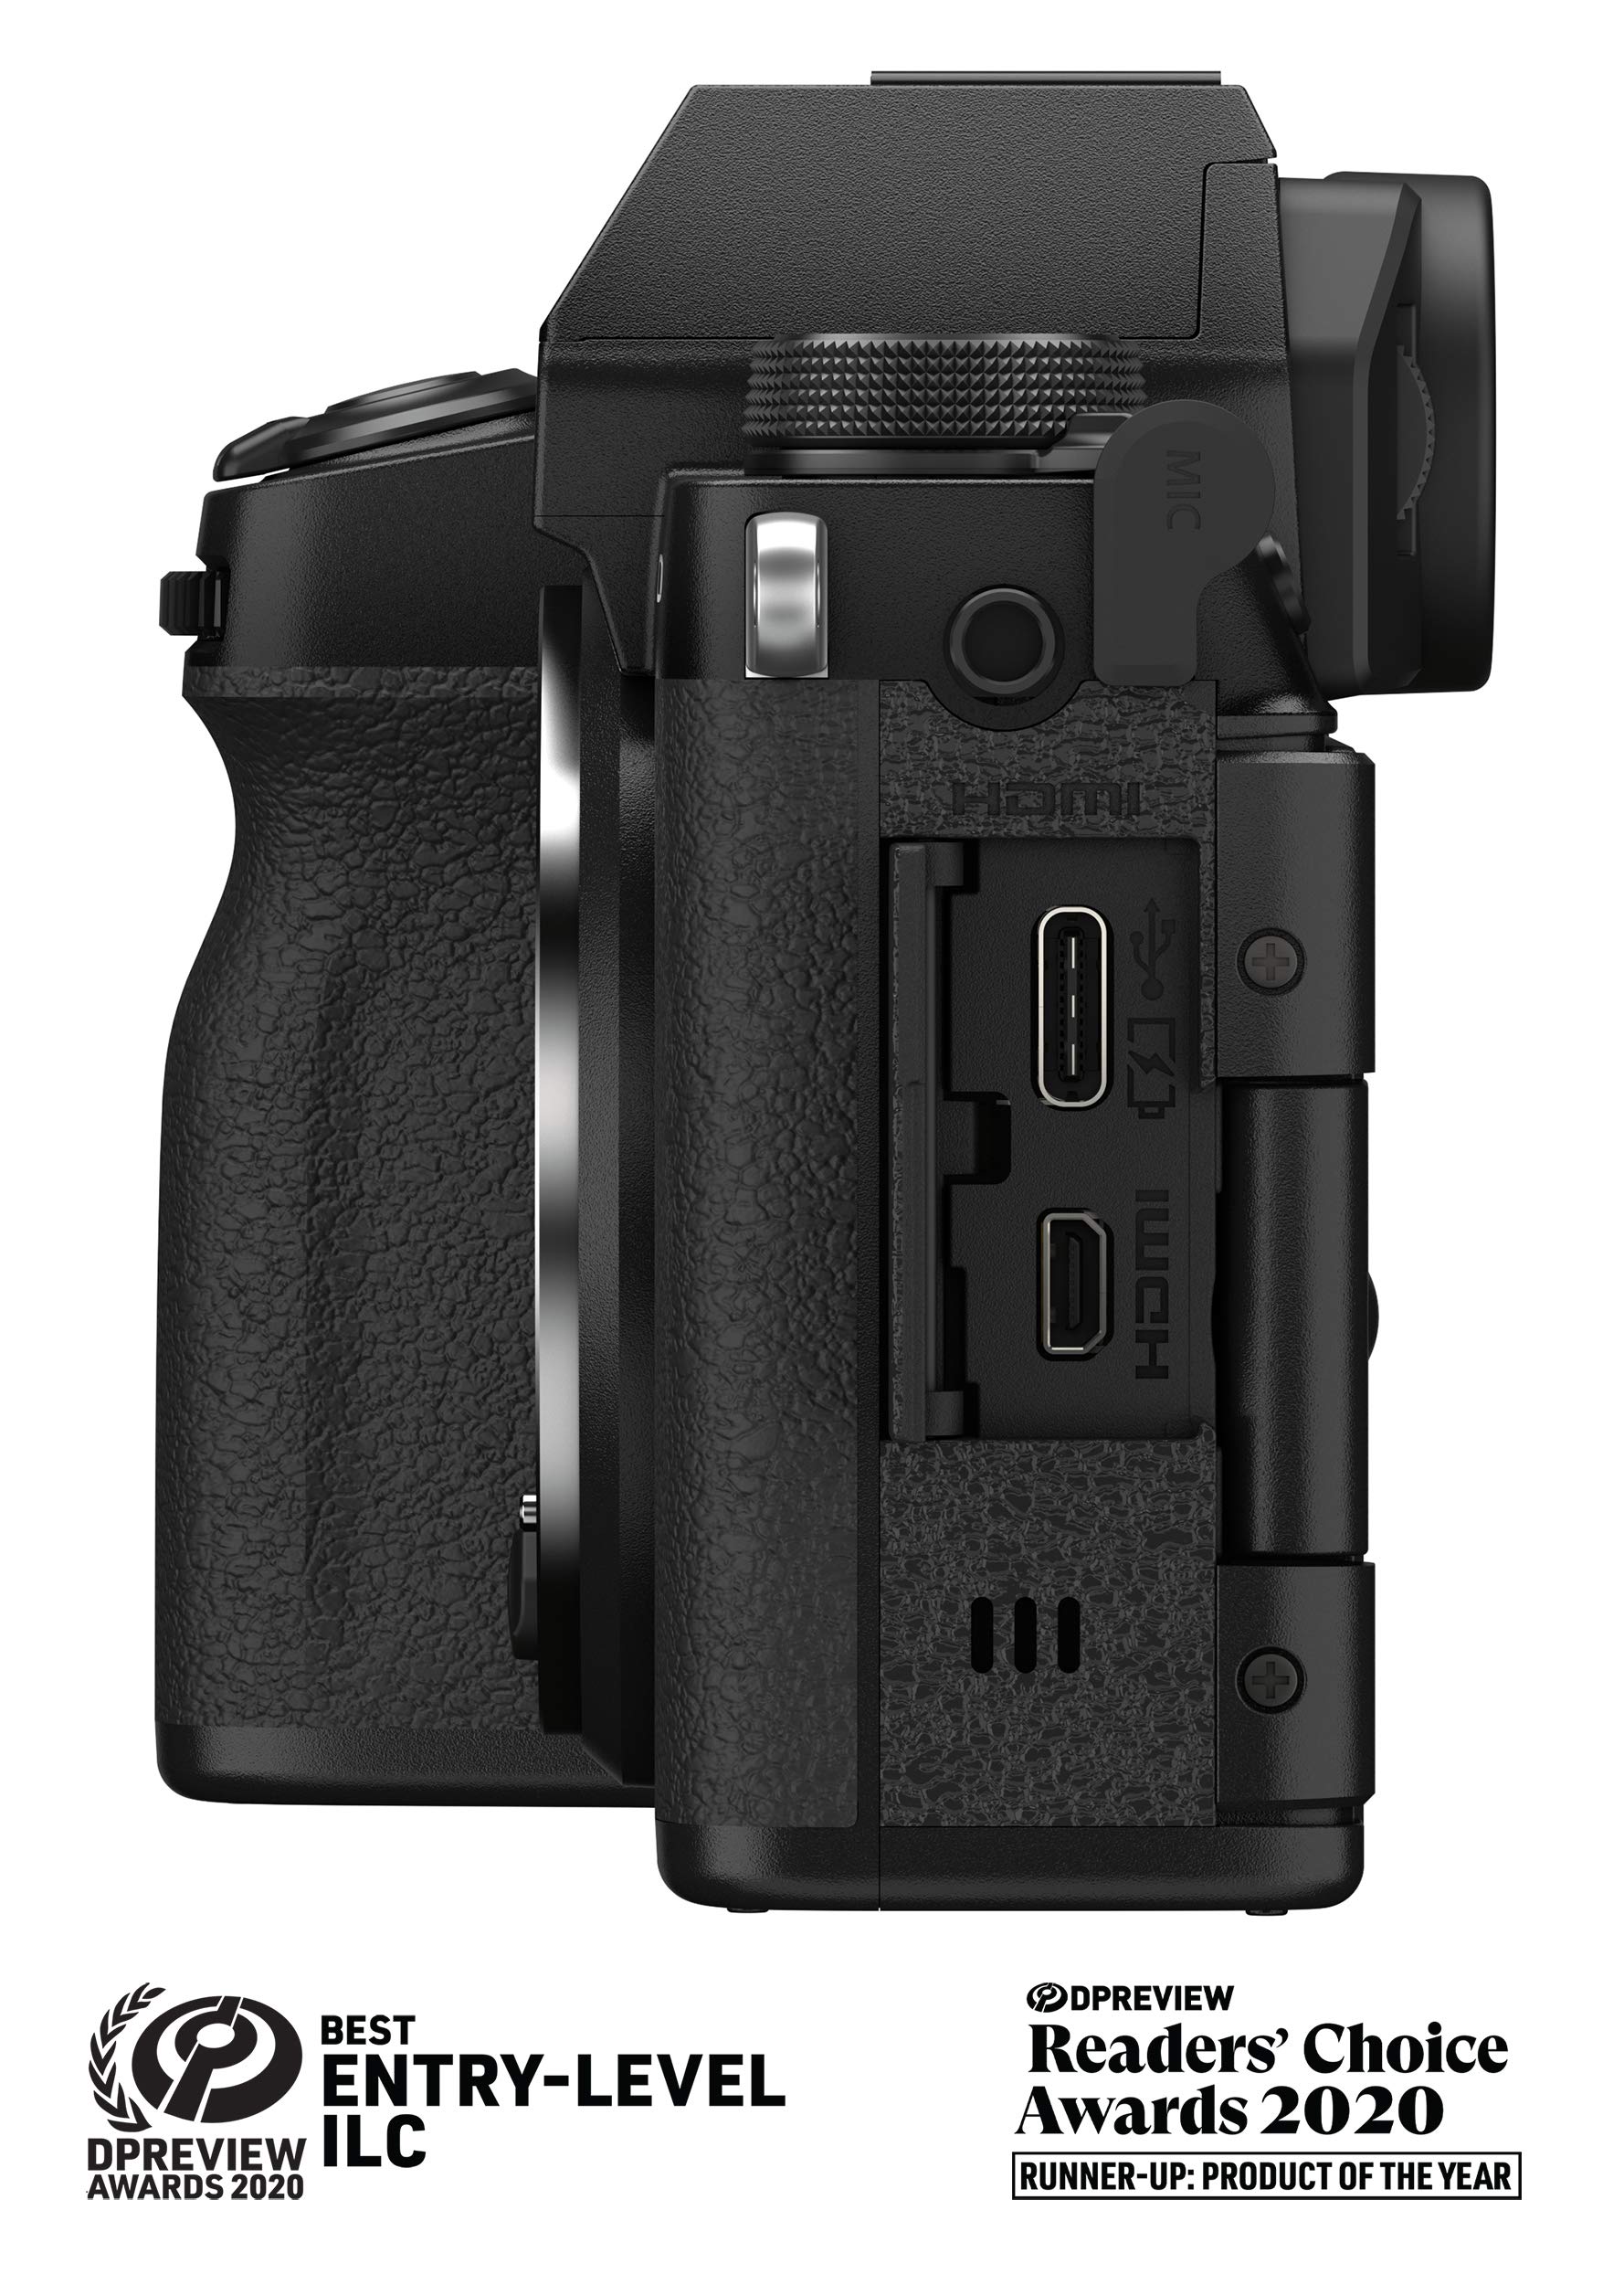 Fujifilm X-S10 Mirrorless Digital Camera XF16-80mm Lens Kit - Black